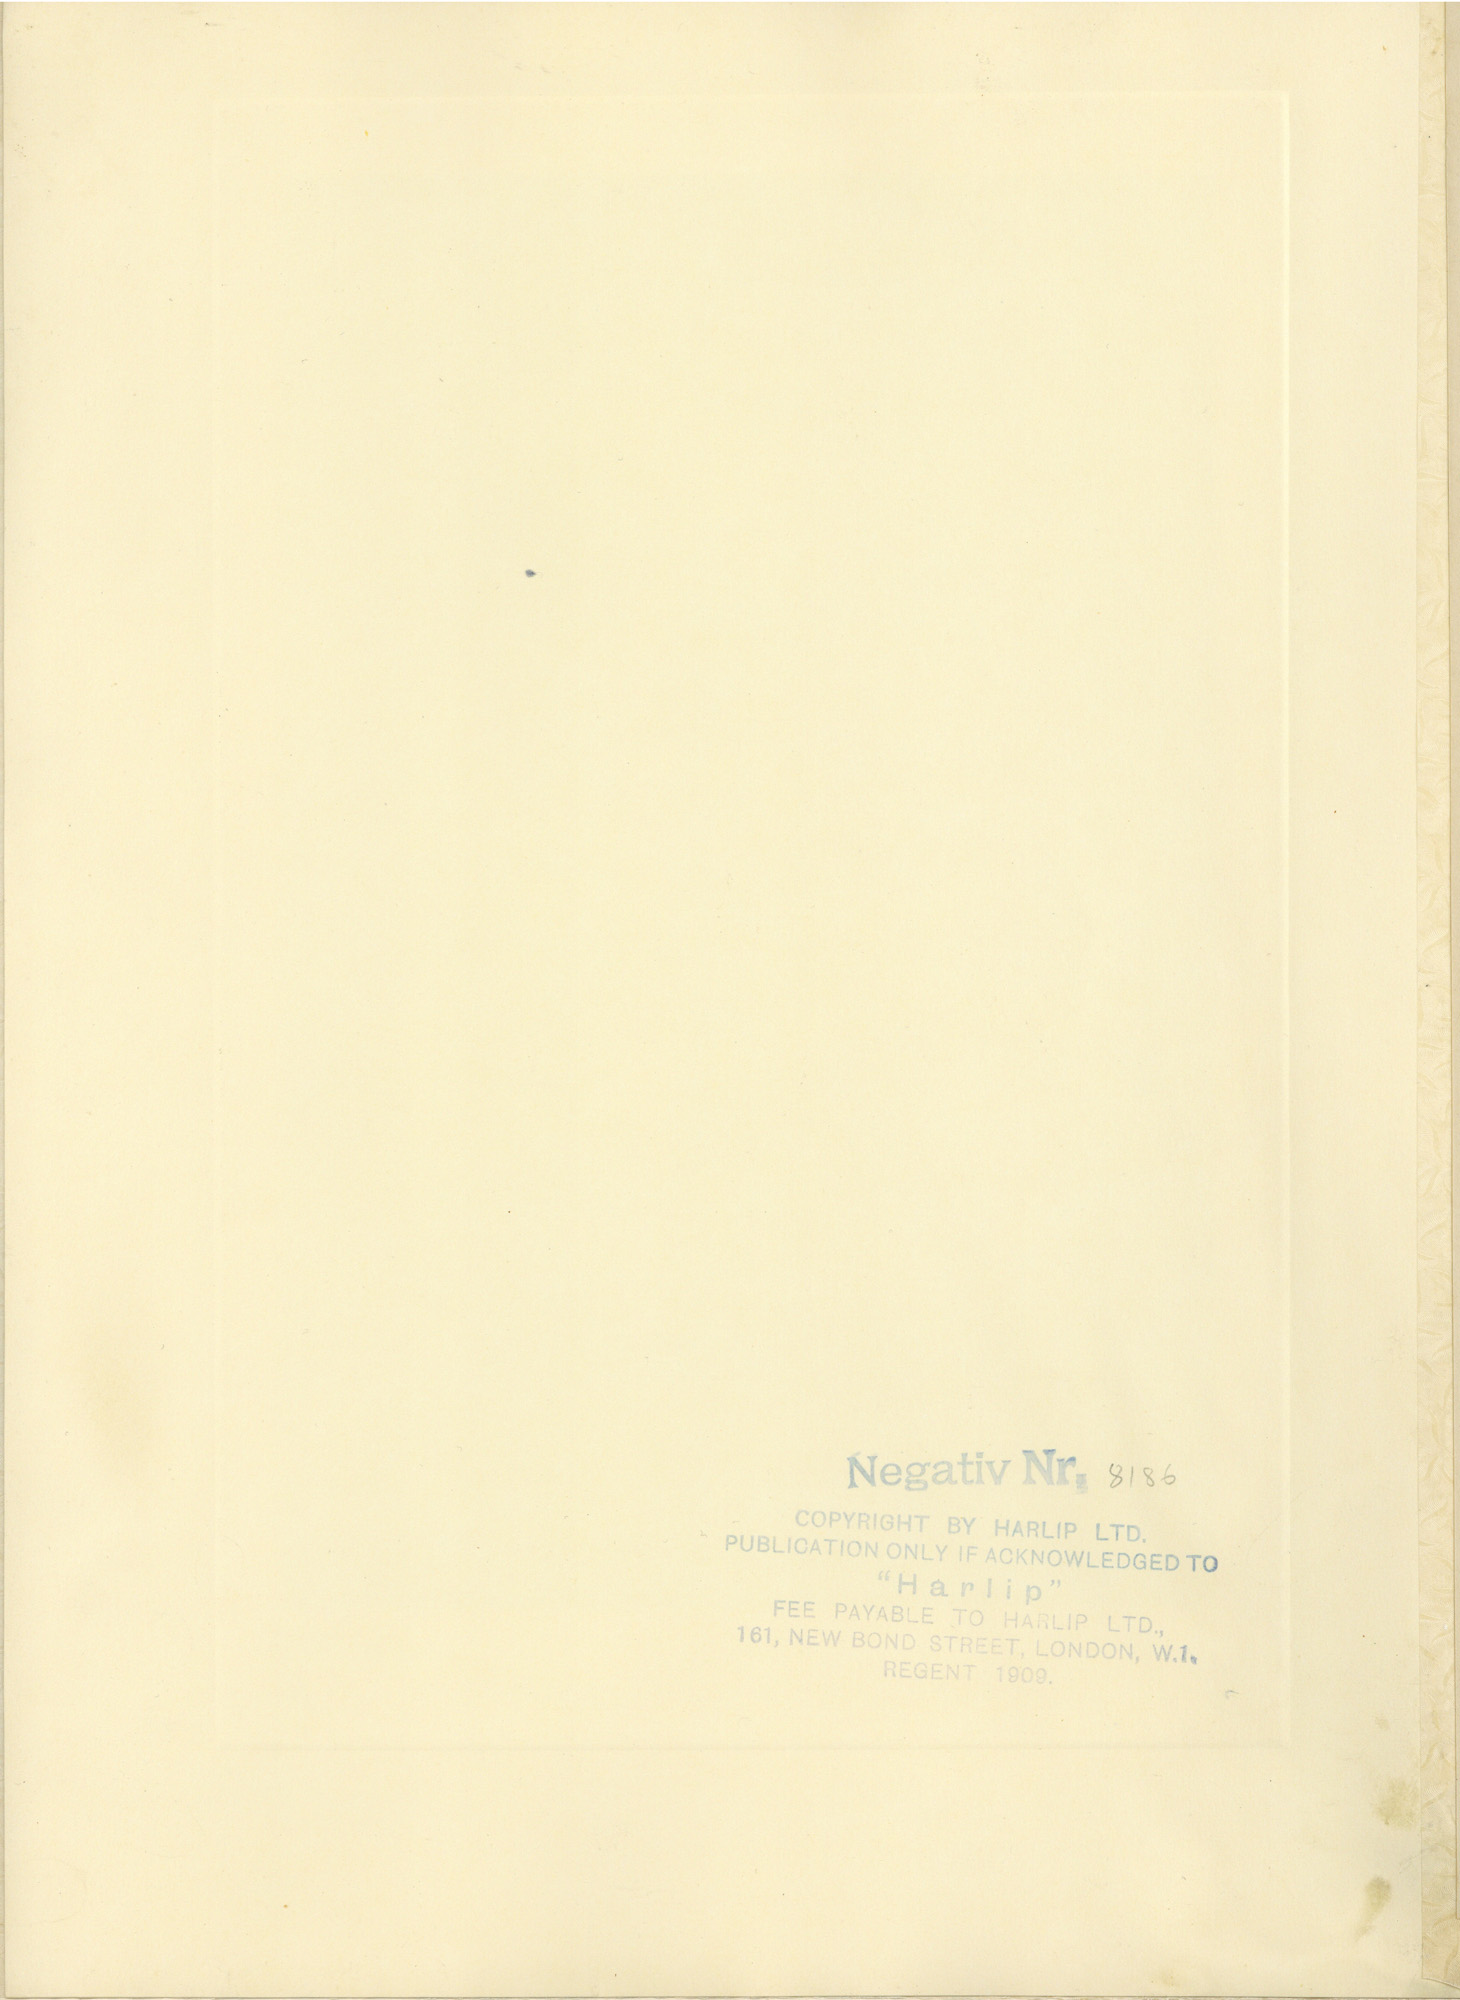 DR GREGOR HARLIP & MADAME MONTE ROSA HARLIP, Cecil Beaton - Image 2 of 2